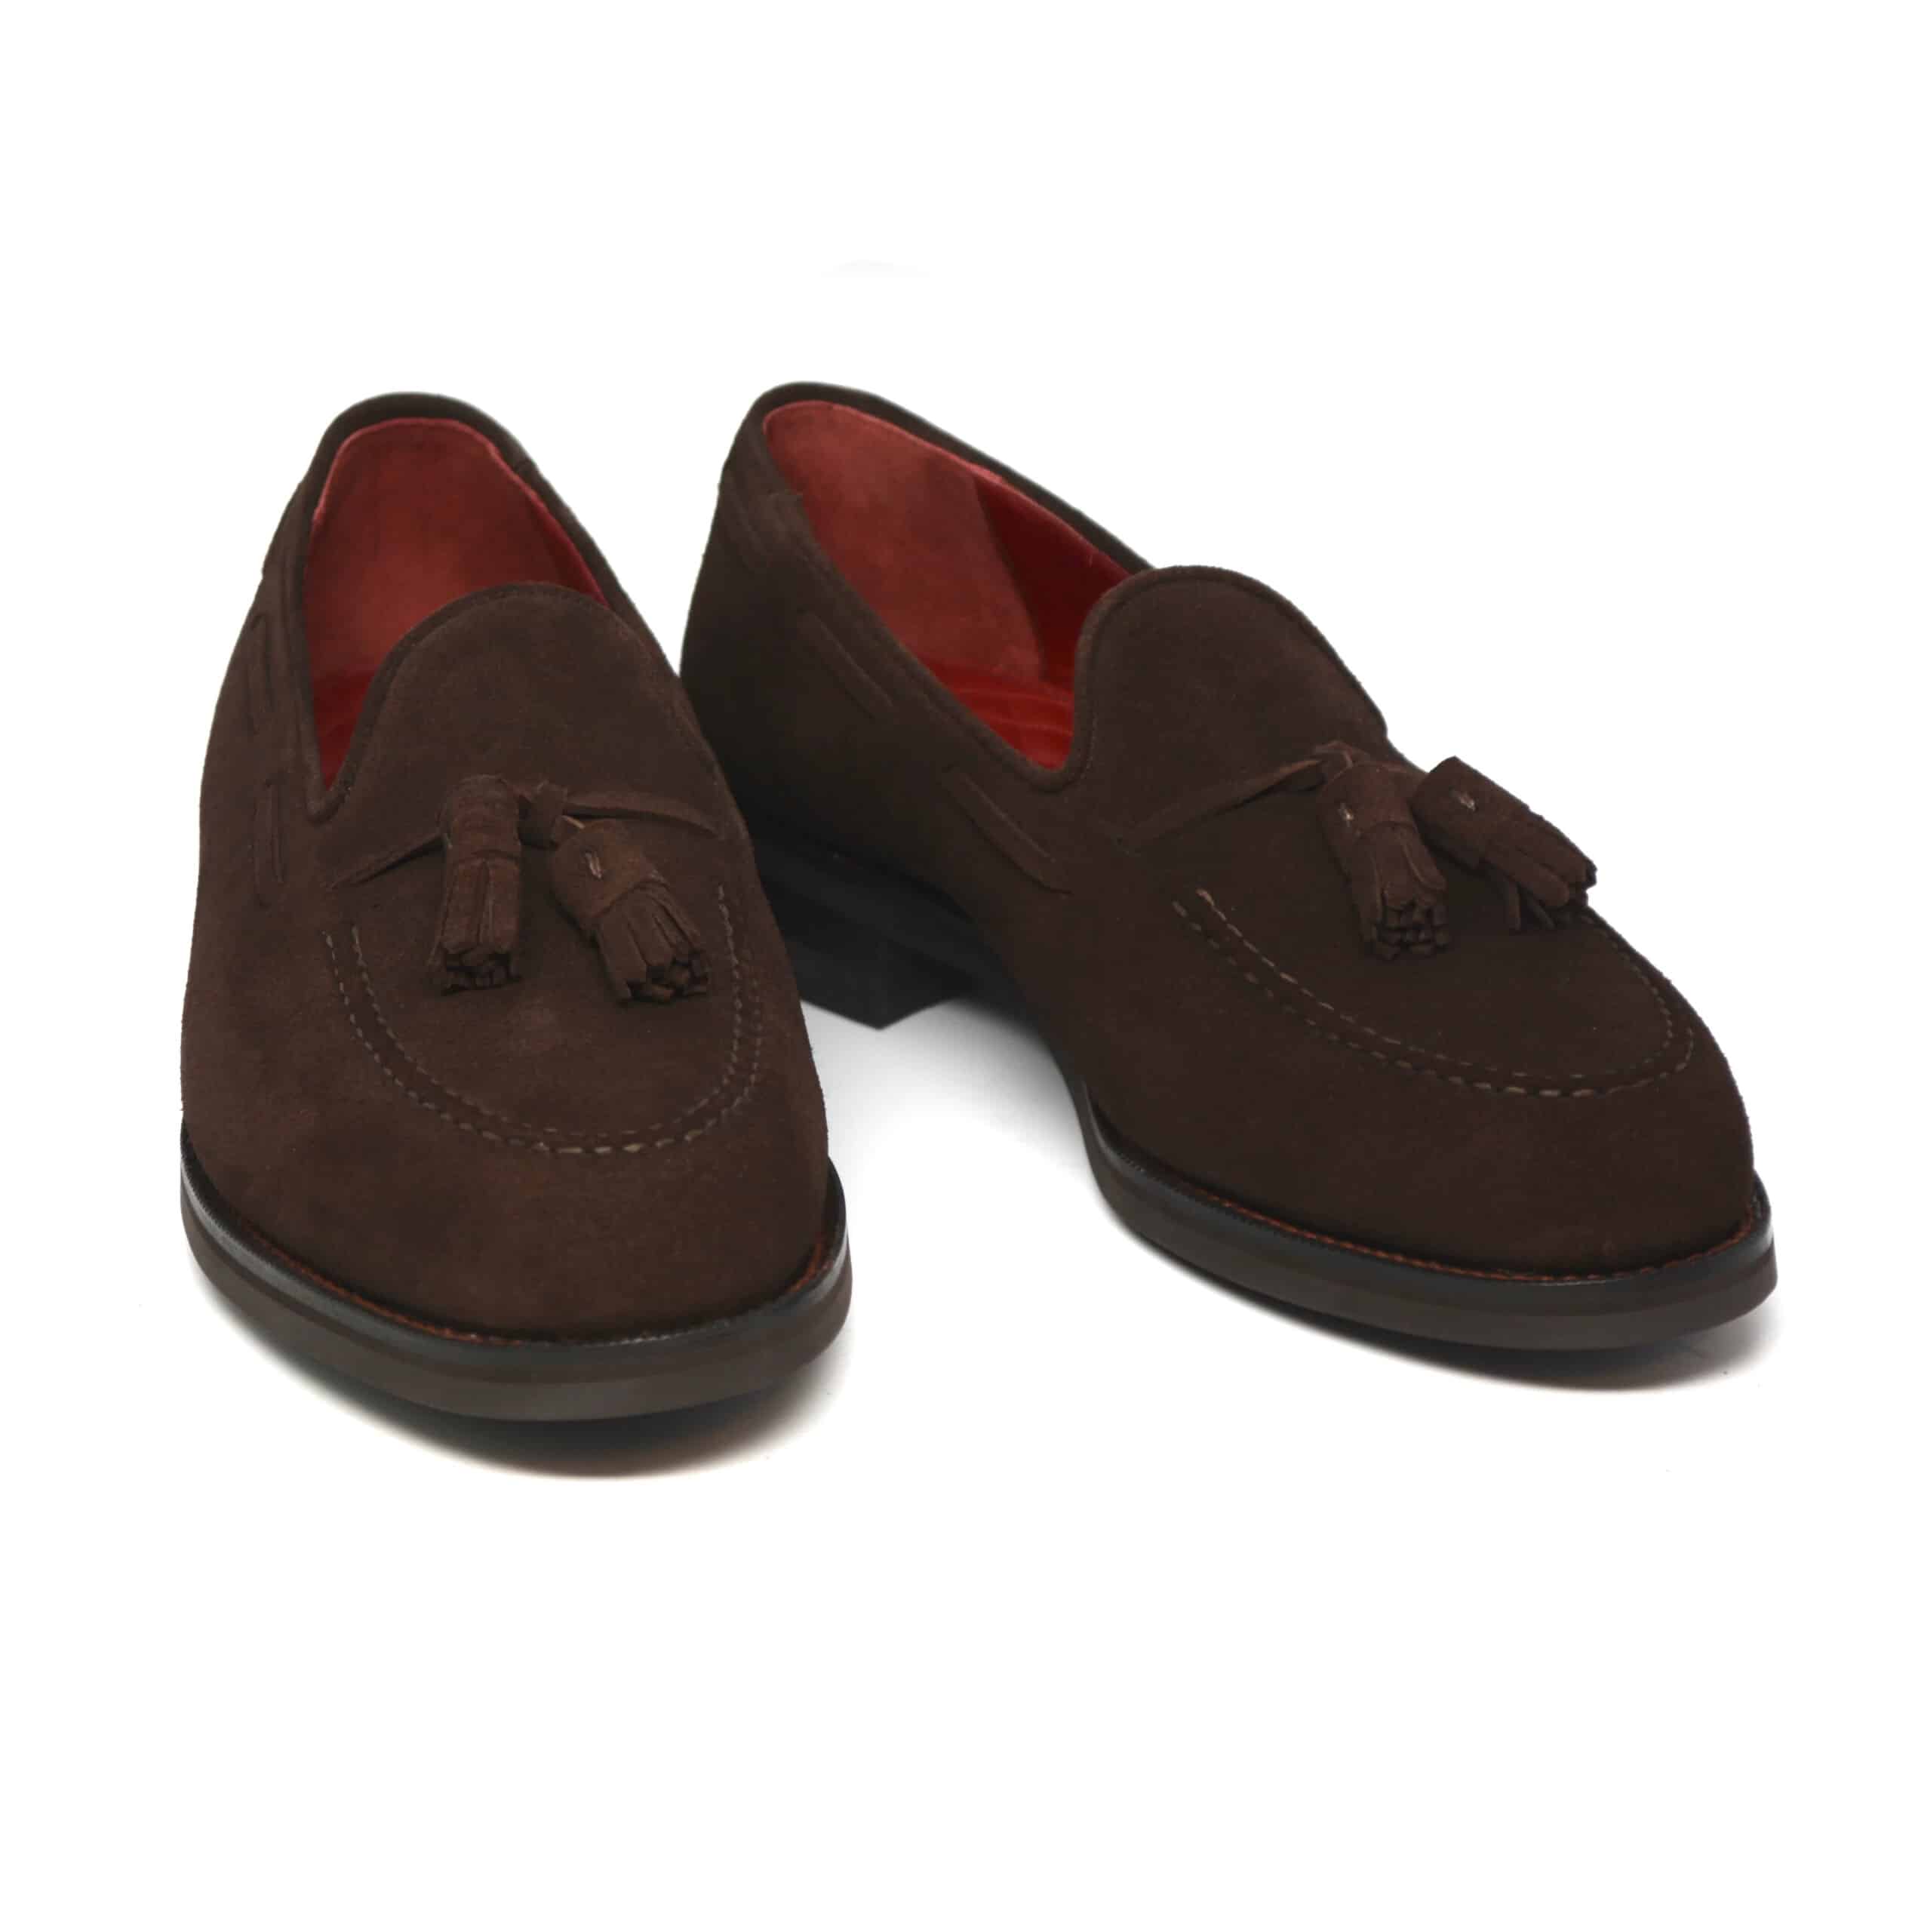 Dark brown tassel loafers by Cobbler Union